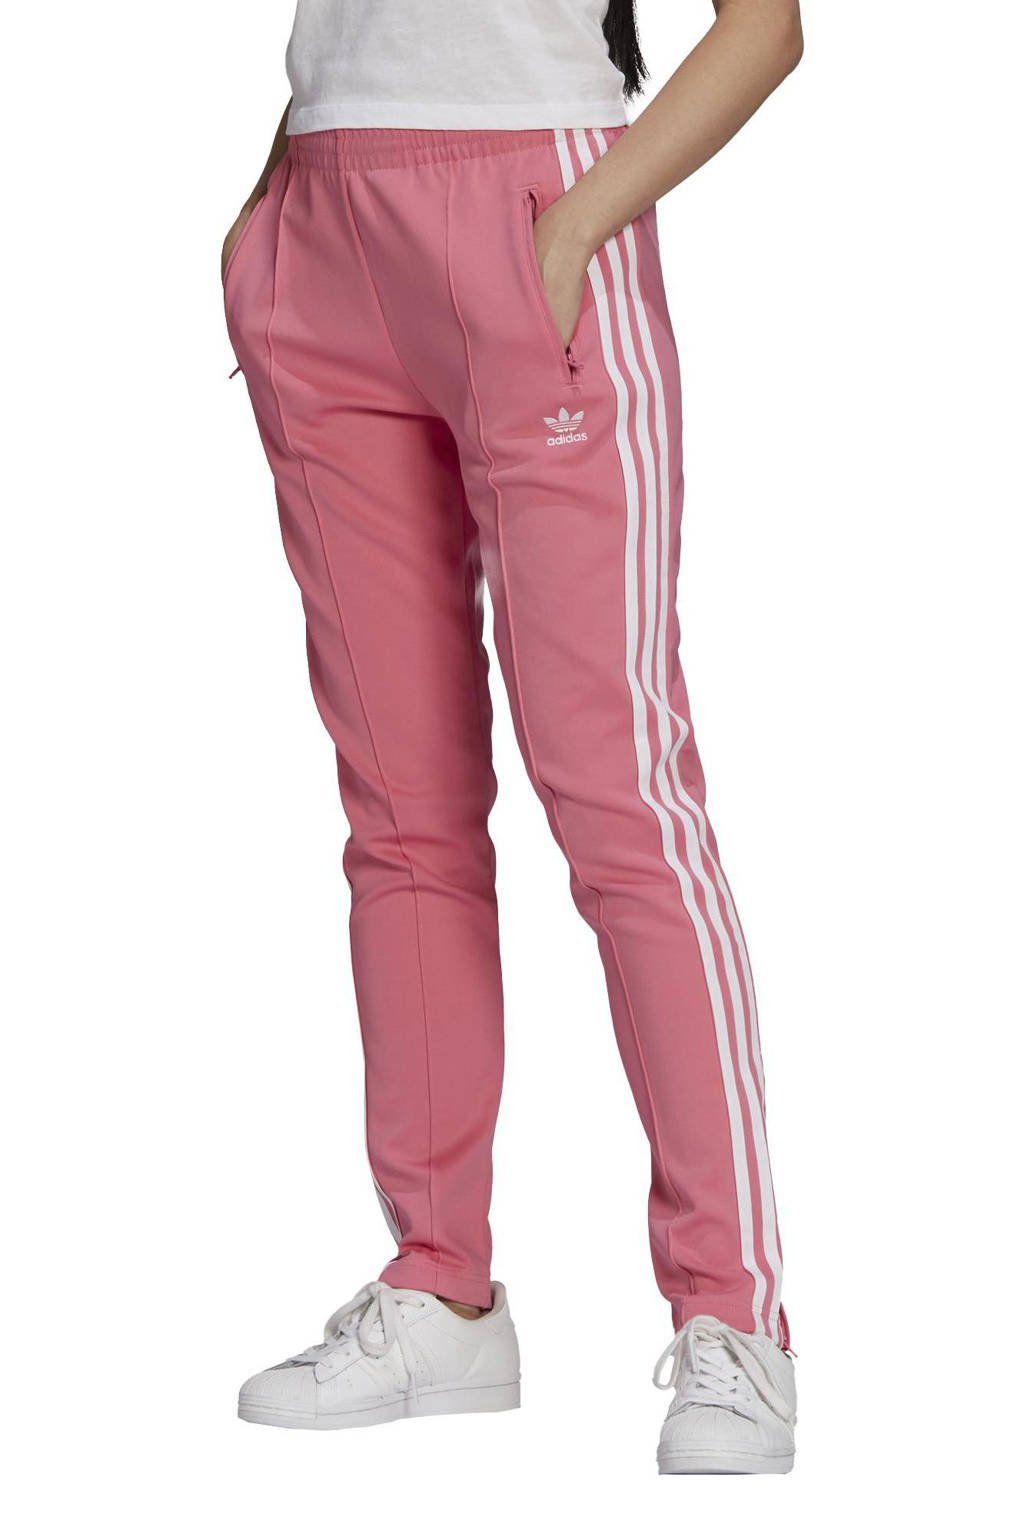 accessoires Zinloos salon adidas Originals Super Star Adicolor joggingbroek roze | wehkamp